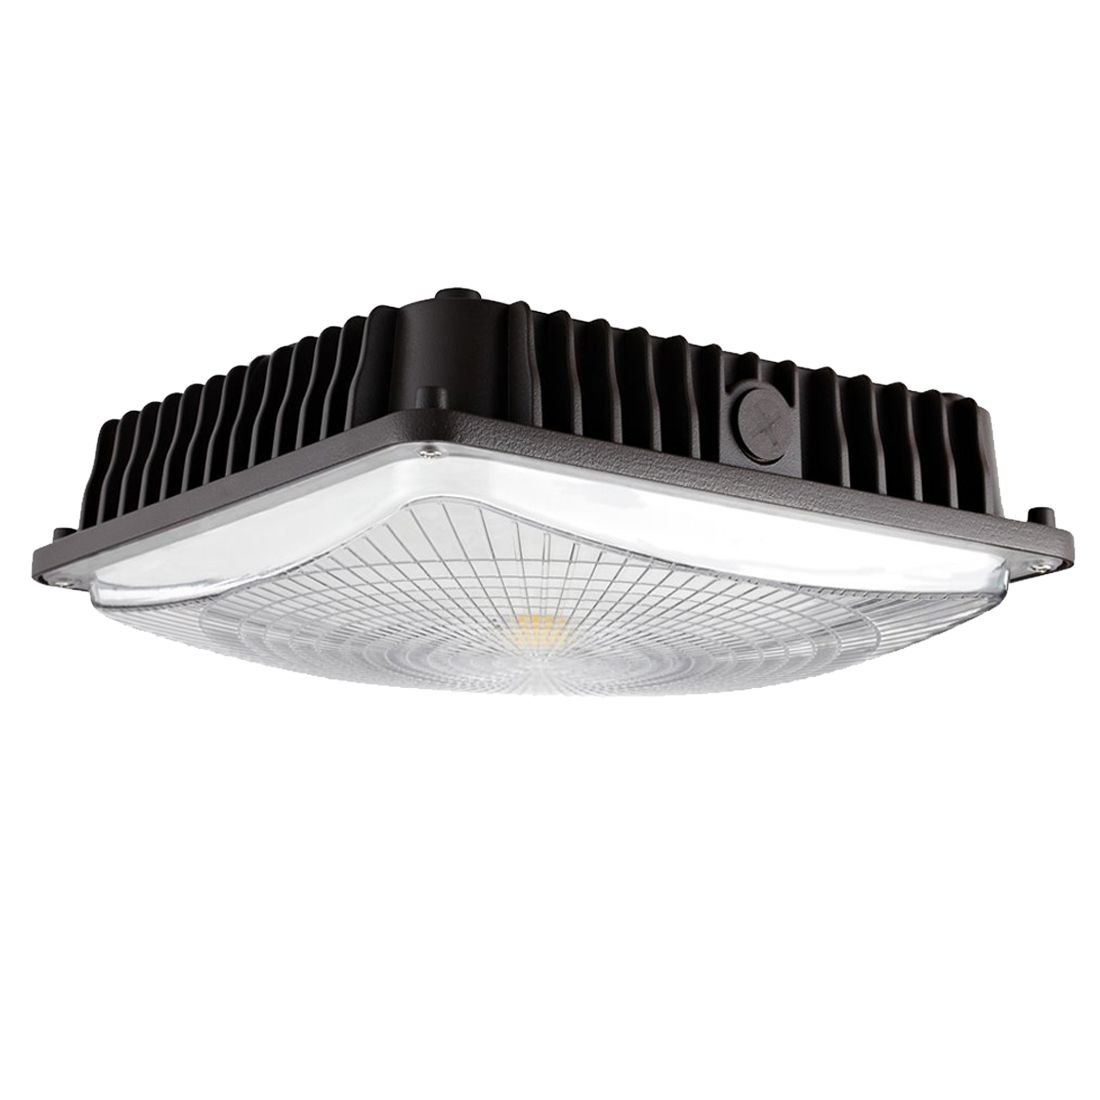 2Pack 70w LED Canopy Light Fixture White Track Lighting Waterproof IP65 120-277V 